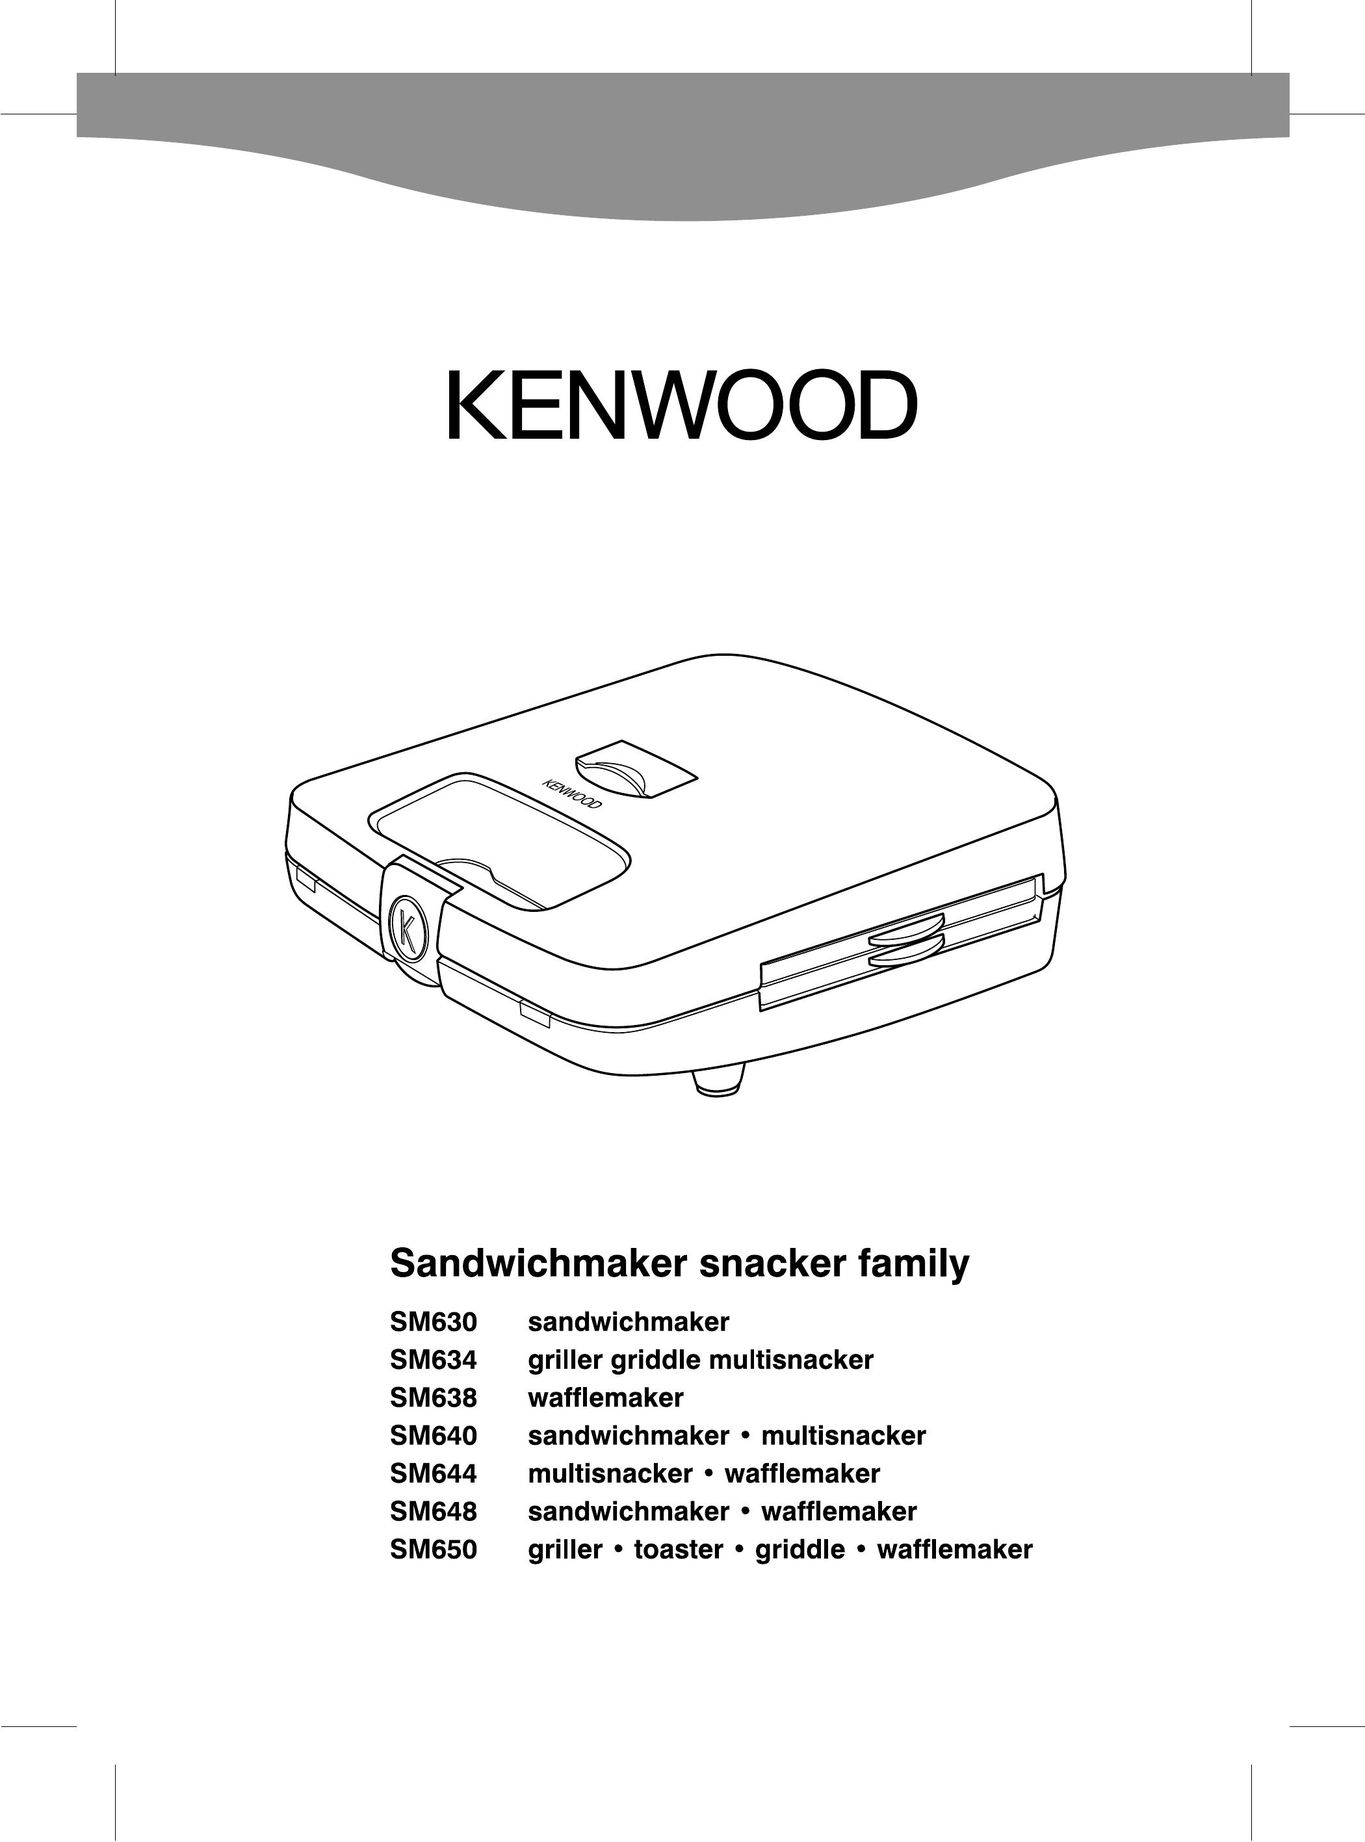 Kenwood SM640 Kitchen Grill User Manual